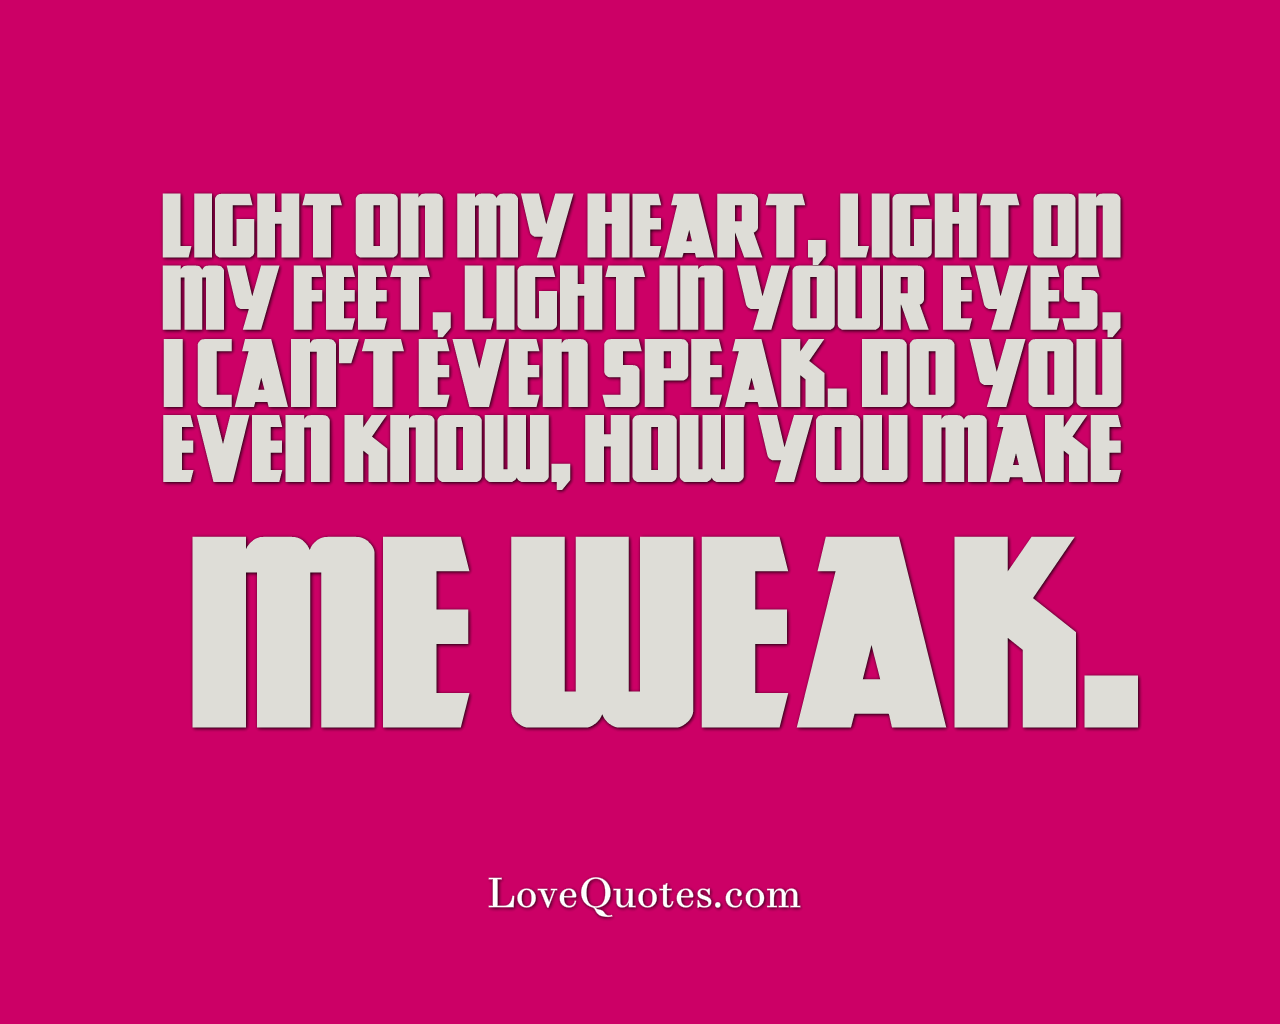 You Make Me Weak